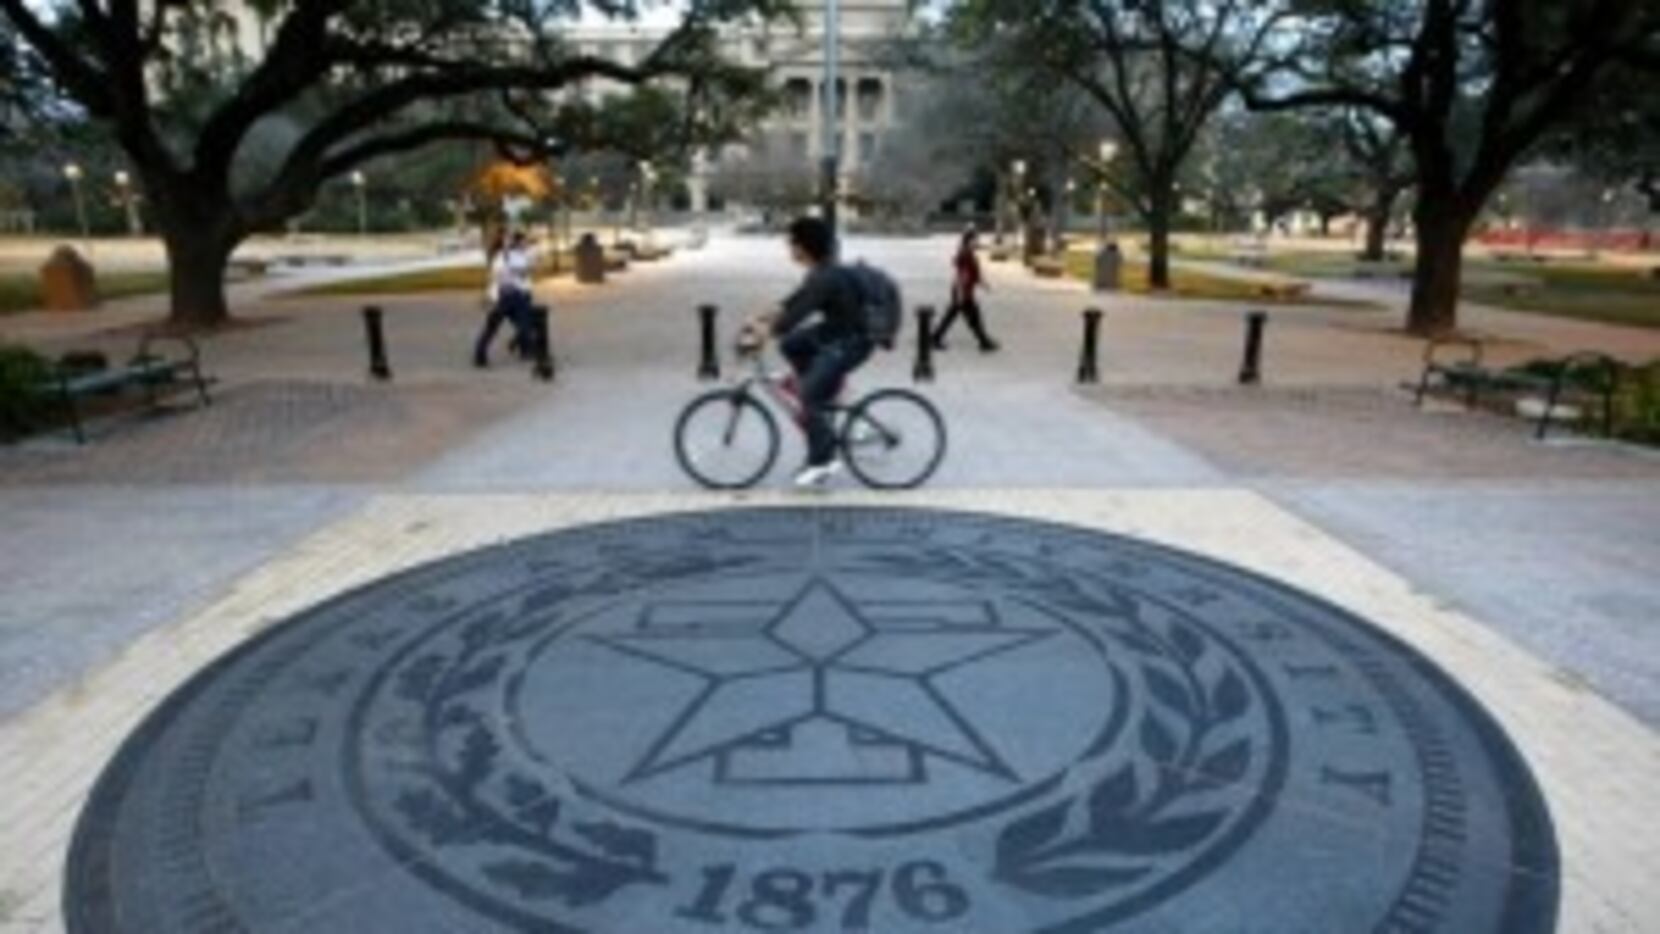  DMN file photo of Texas A&M University